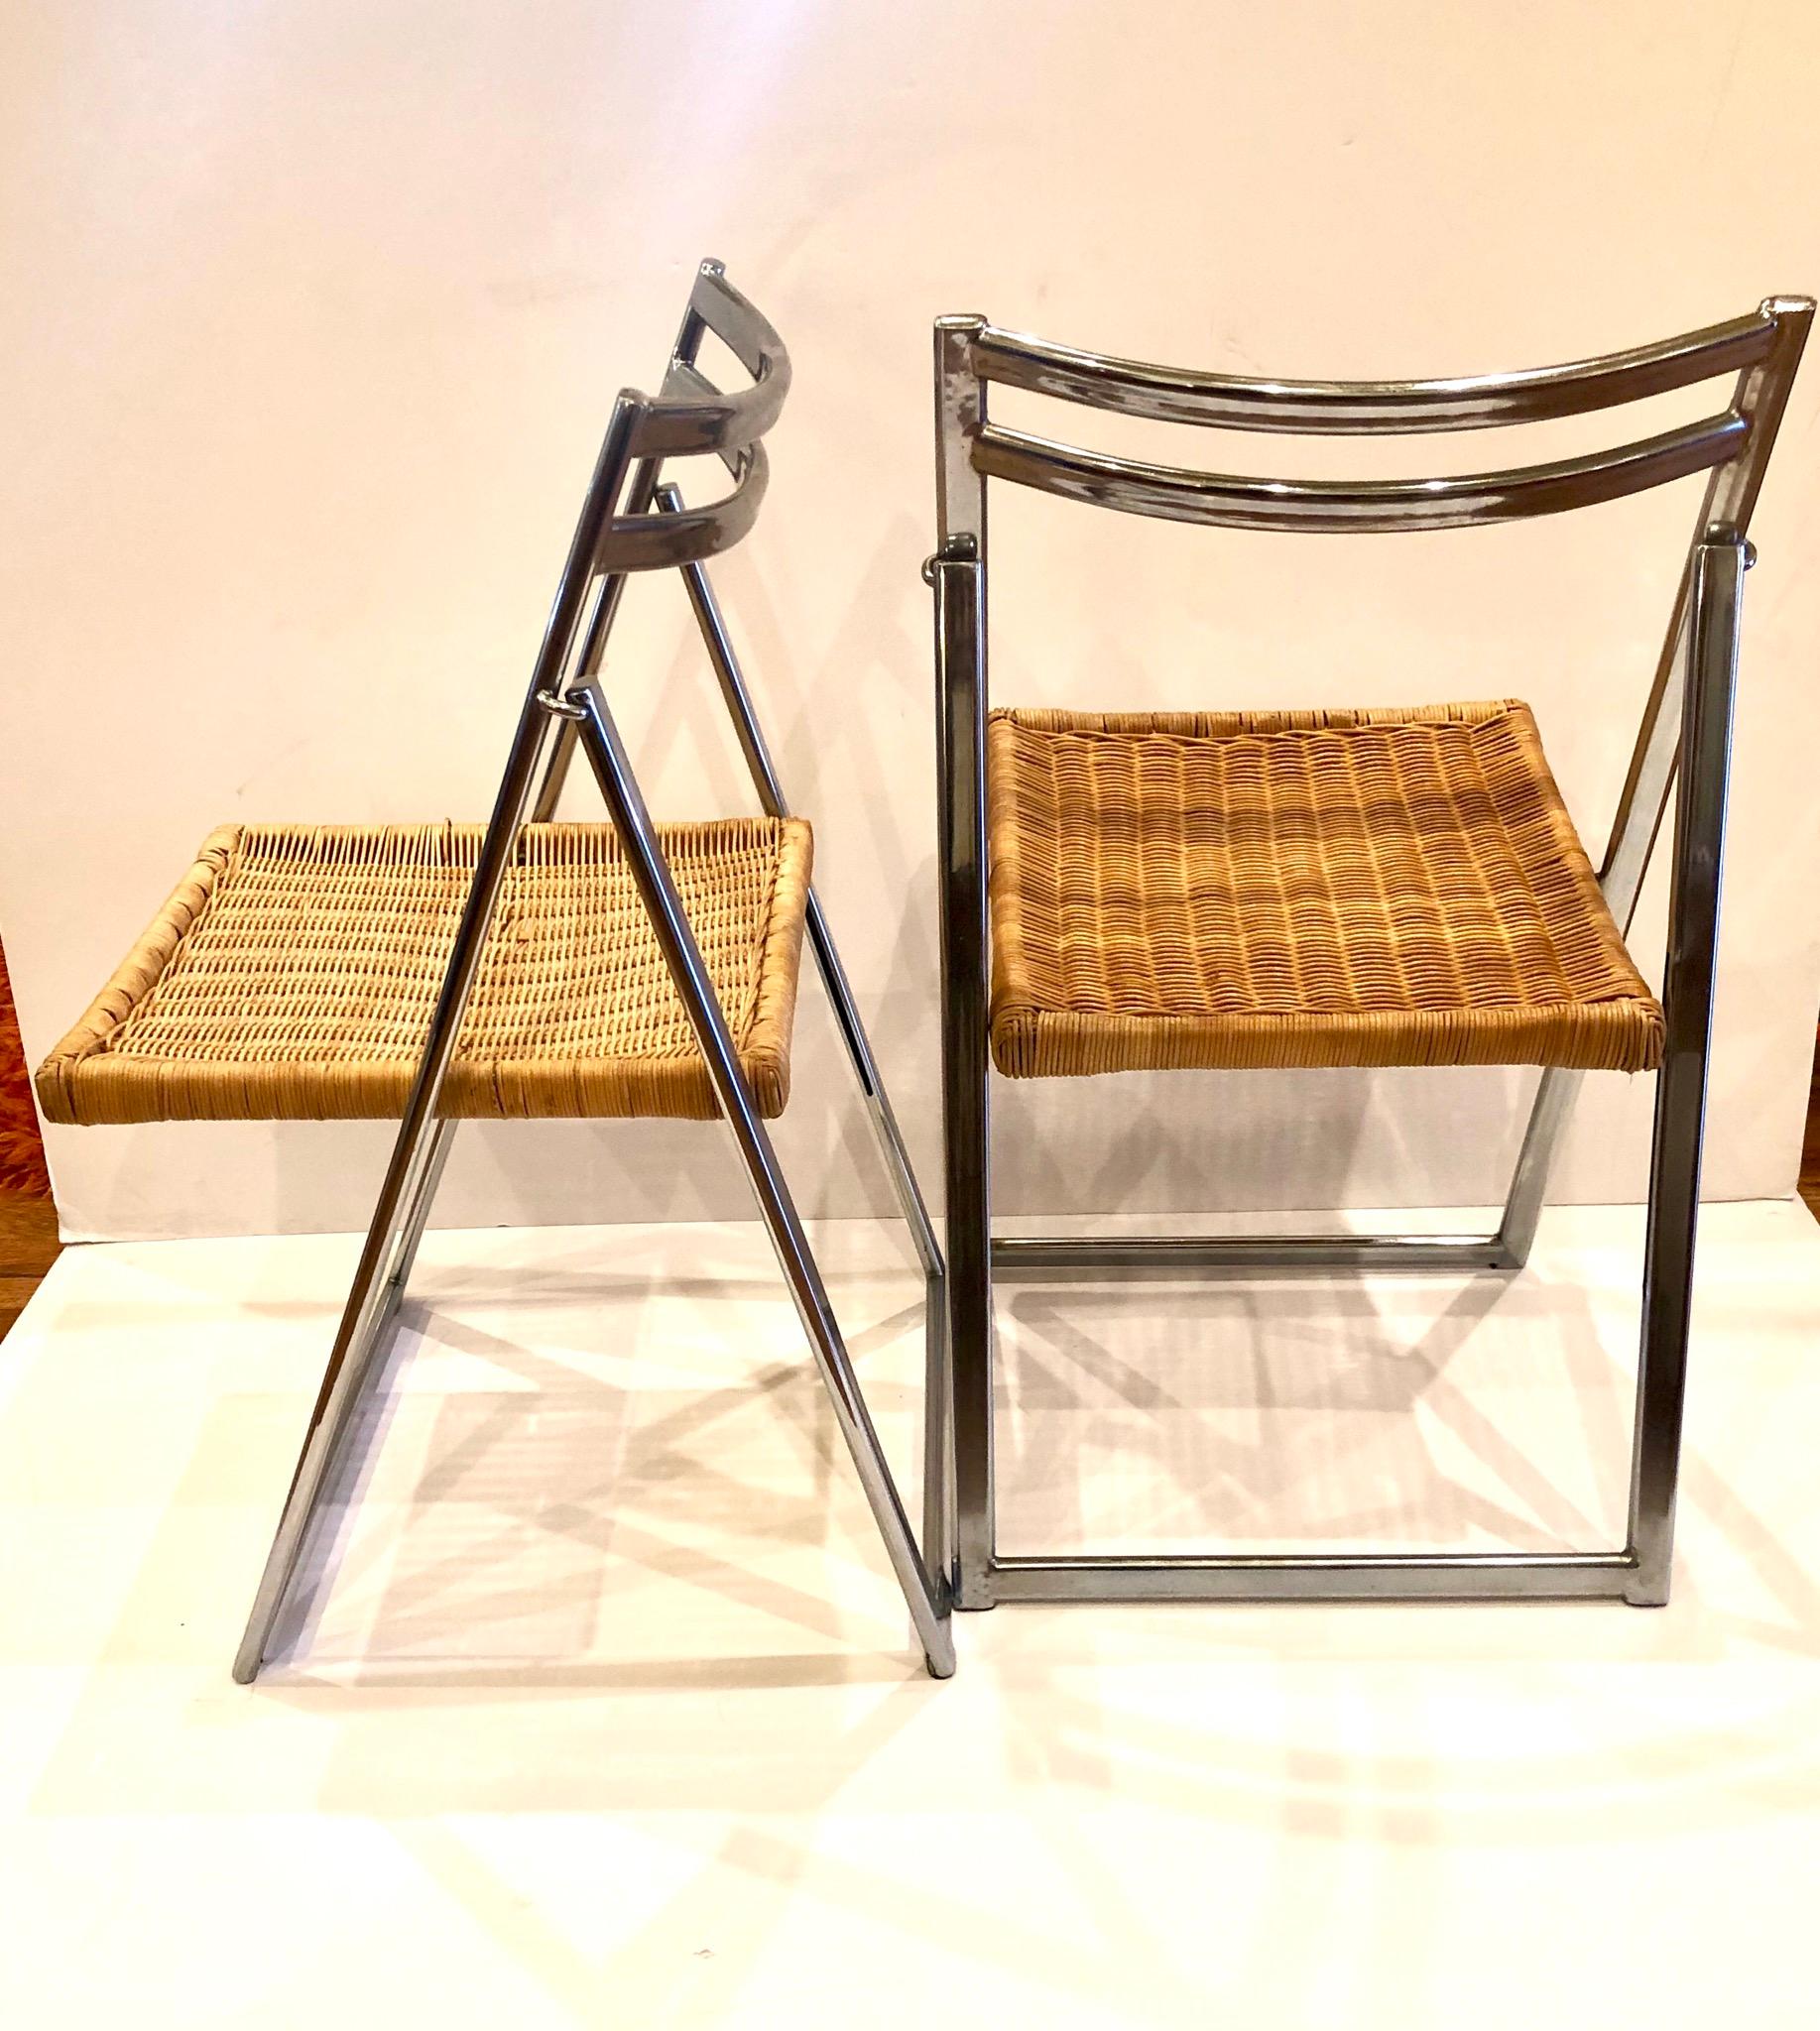 20th Century Italian Mid-Century Modern Pair of Folding Chairs in Chrome & Wicker